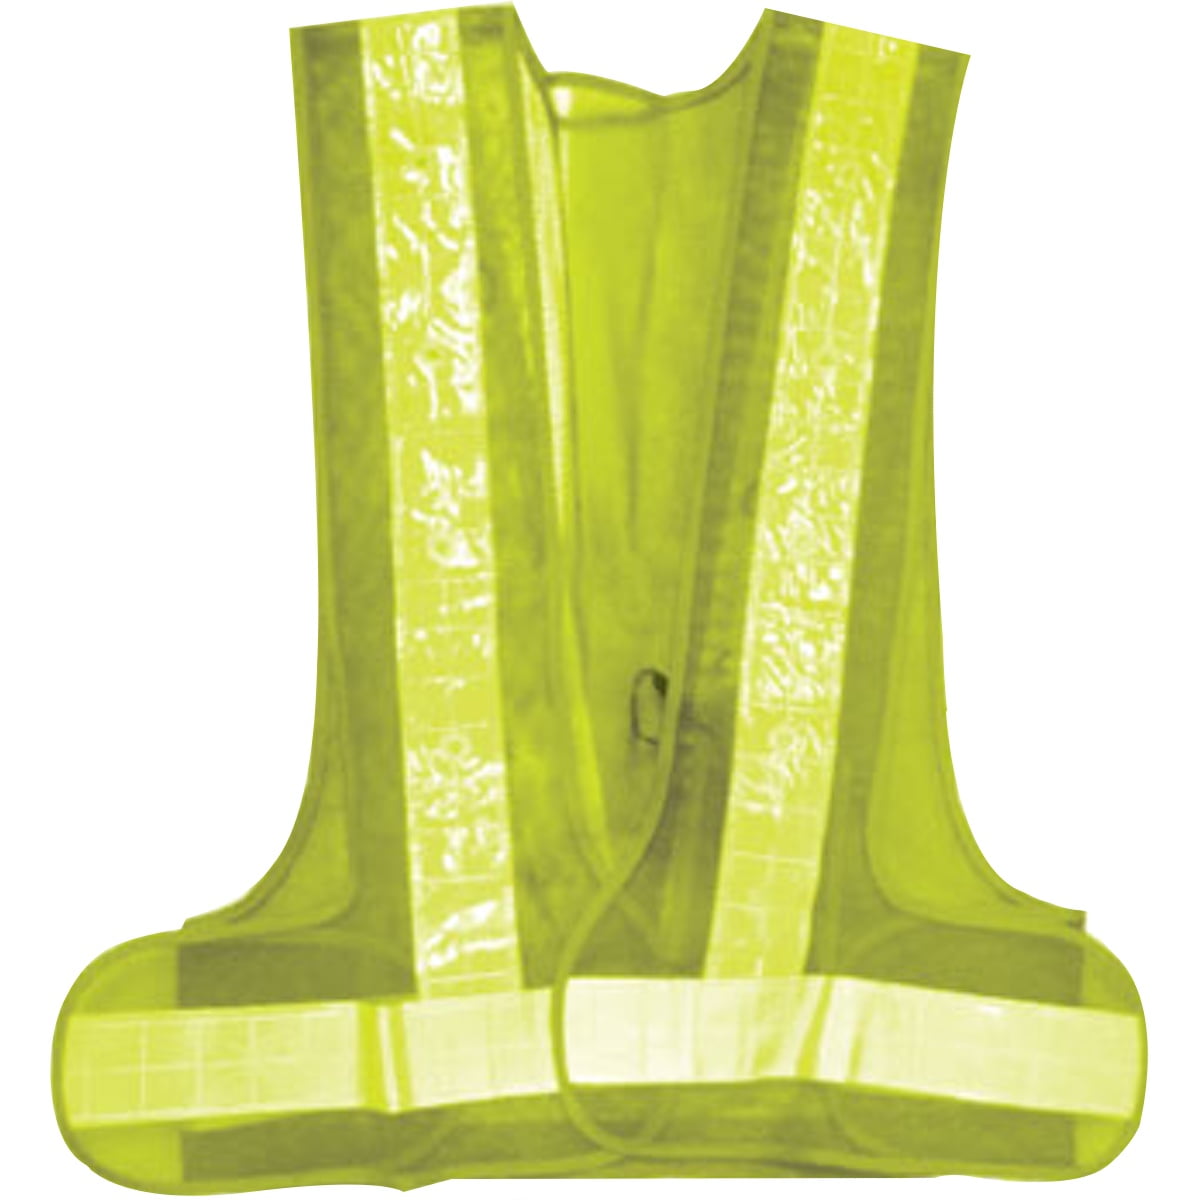 Green Reflective Illuminated Light up Safety Vest Dusk Walking Running LED Bulbs for sale online 